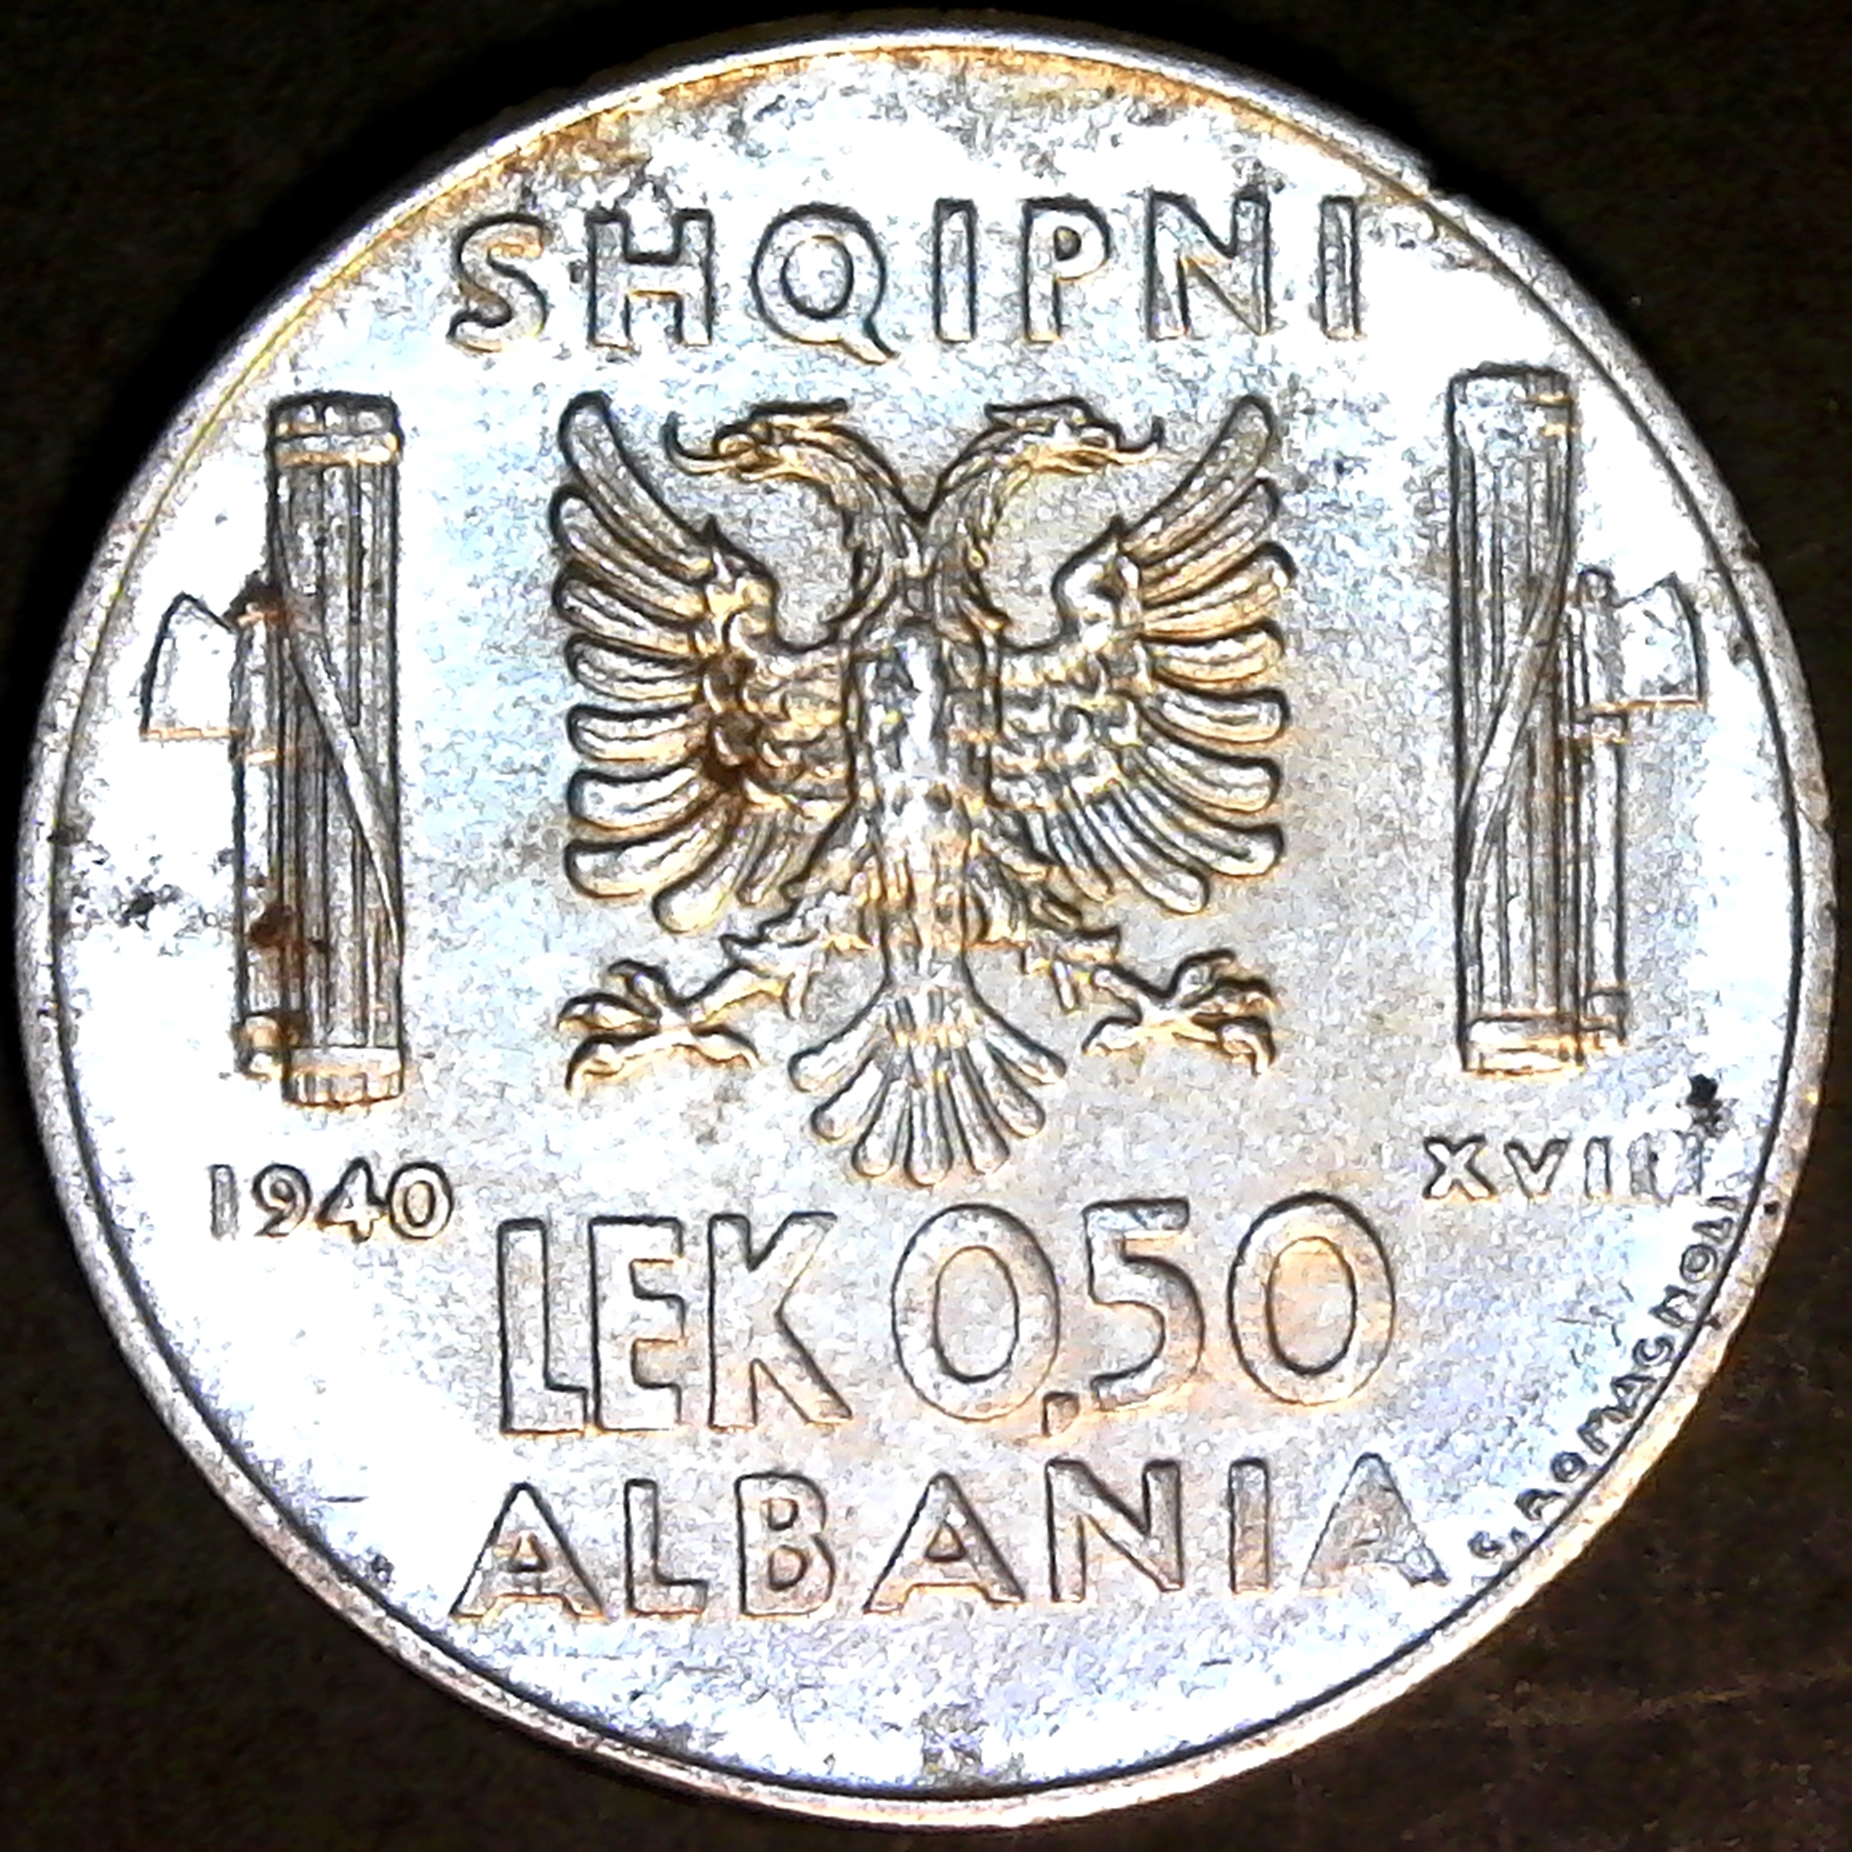 Albania Half Lek 1940 rev.jpg